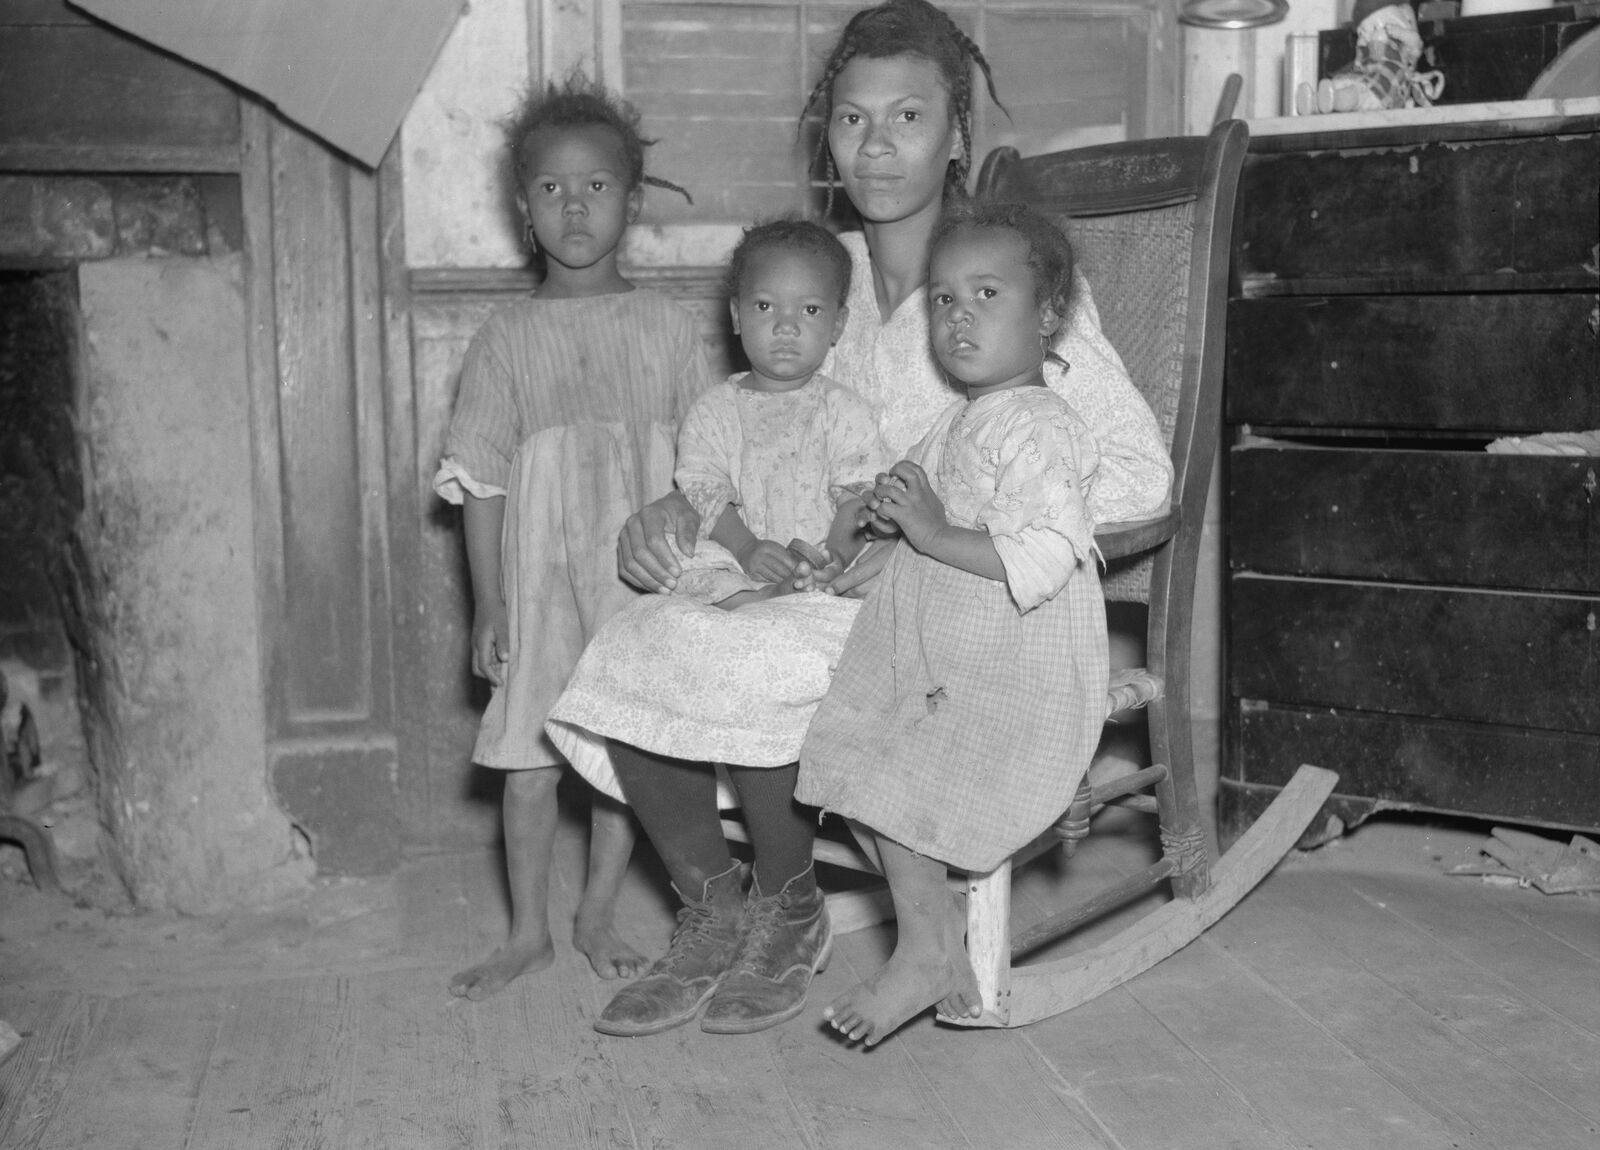 Descendants Pettway Plantation Slaves Gees Bend AL Vintage Old Photo 11